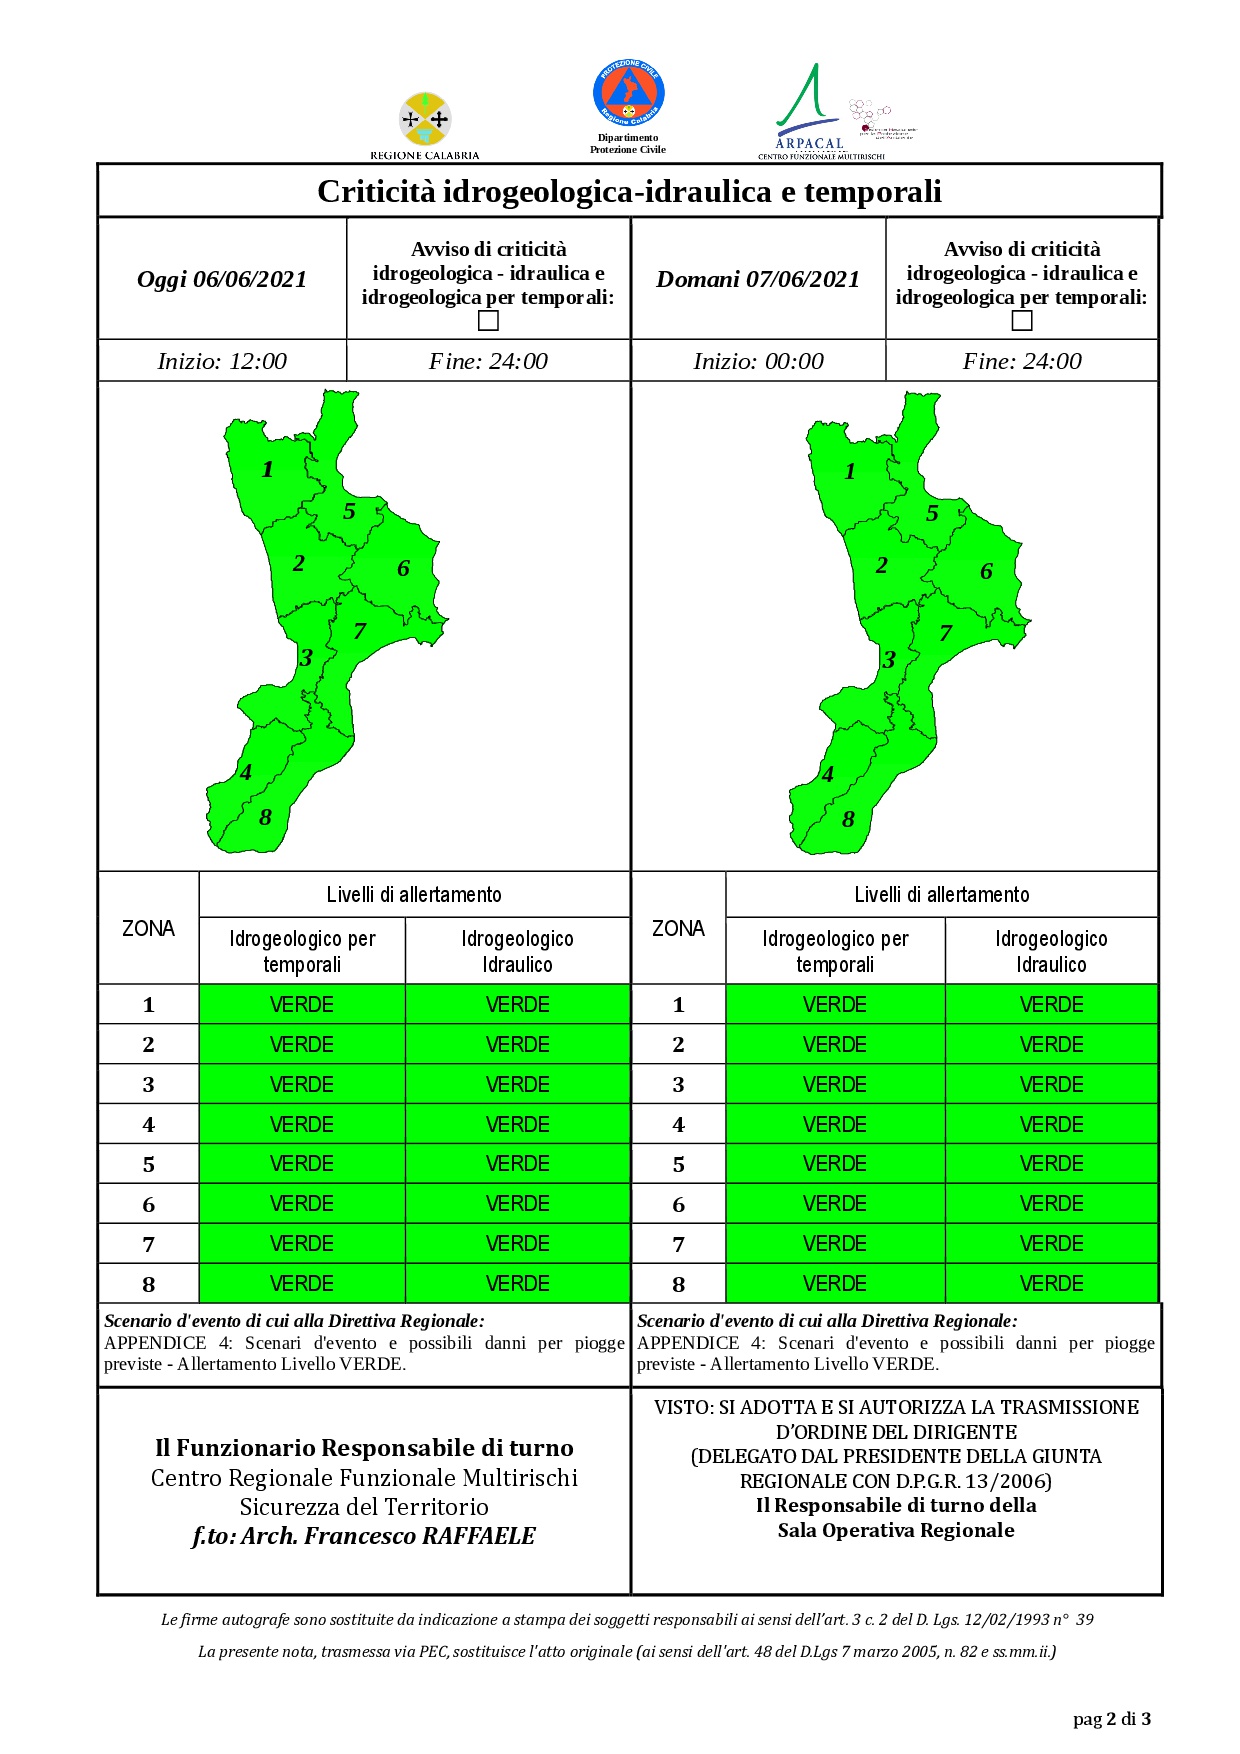 Criticità idrogeologica-idraulica e temporali in Calabria 06-06-2021